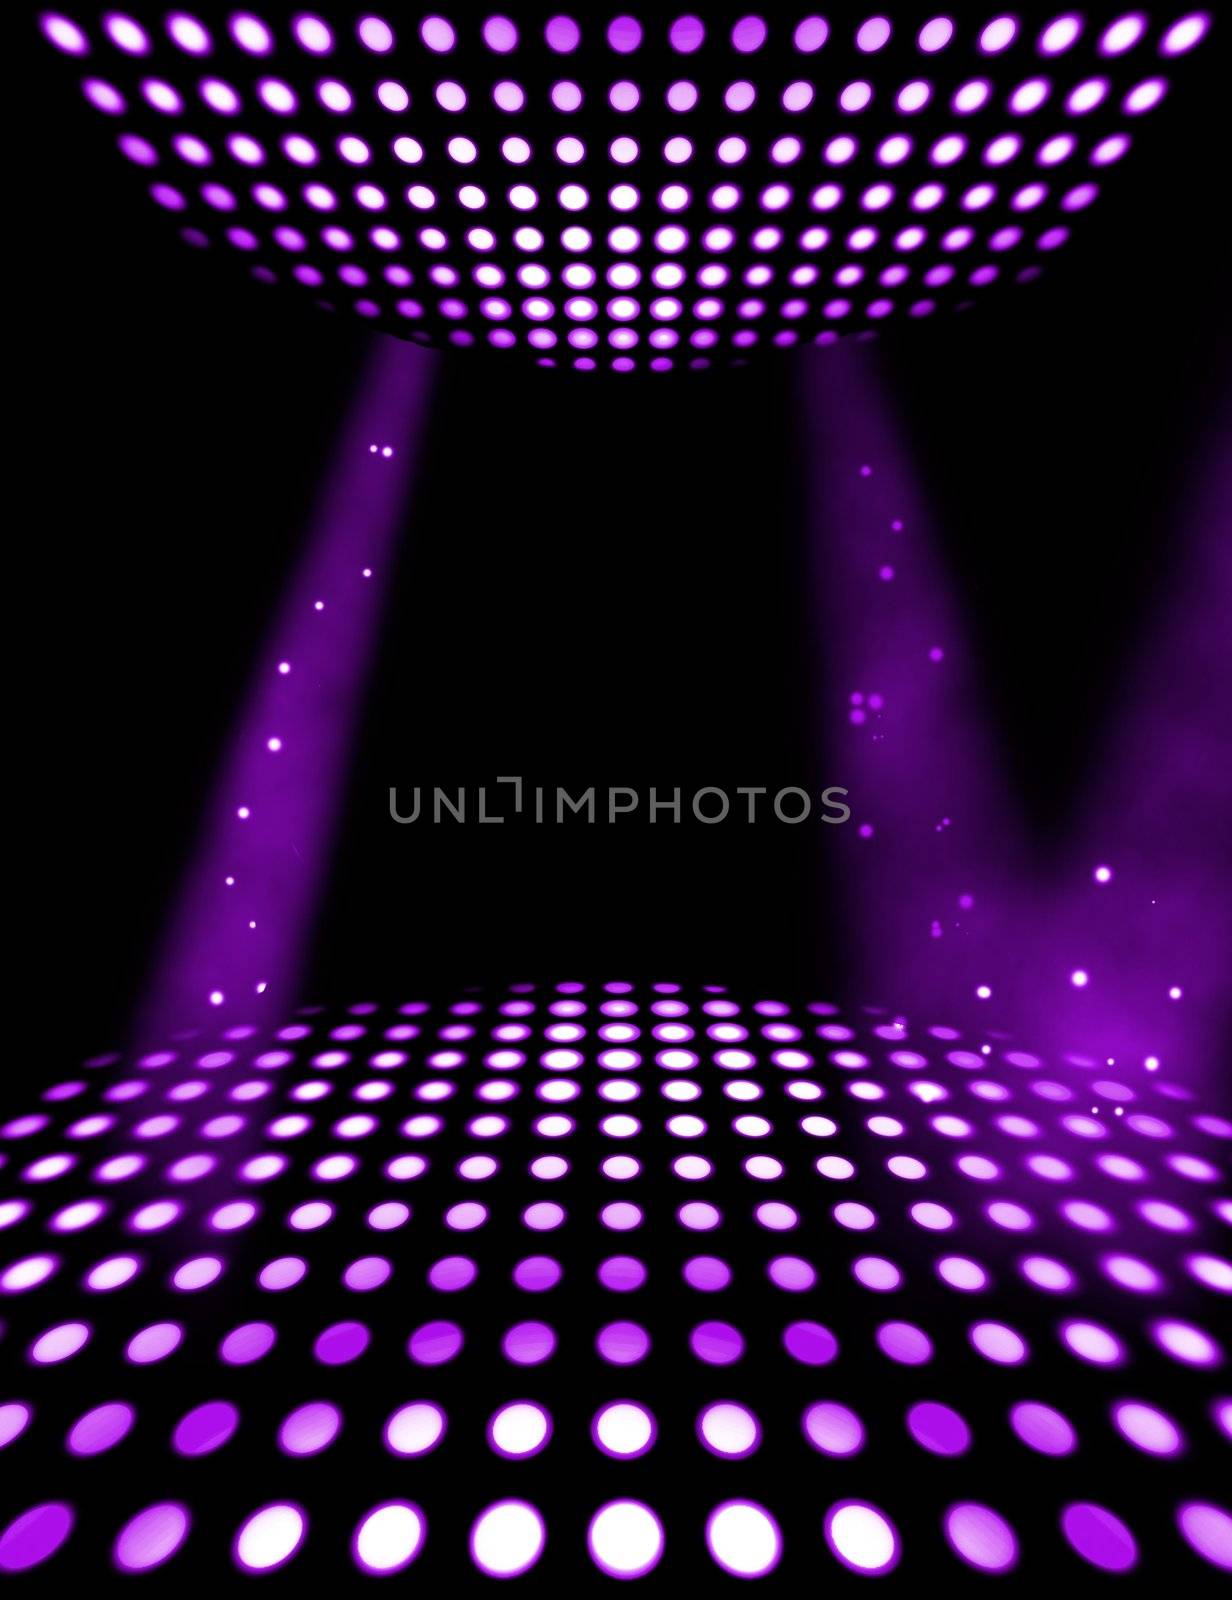 Dance floor disco poster background. Illuminated spotlights by simpson33